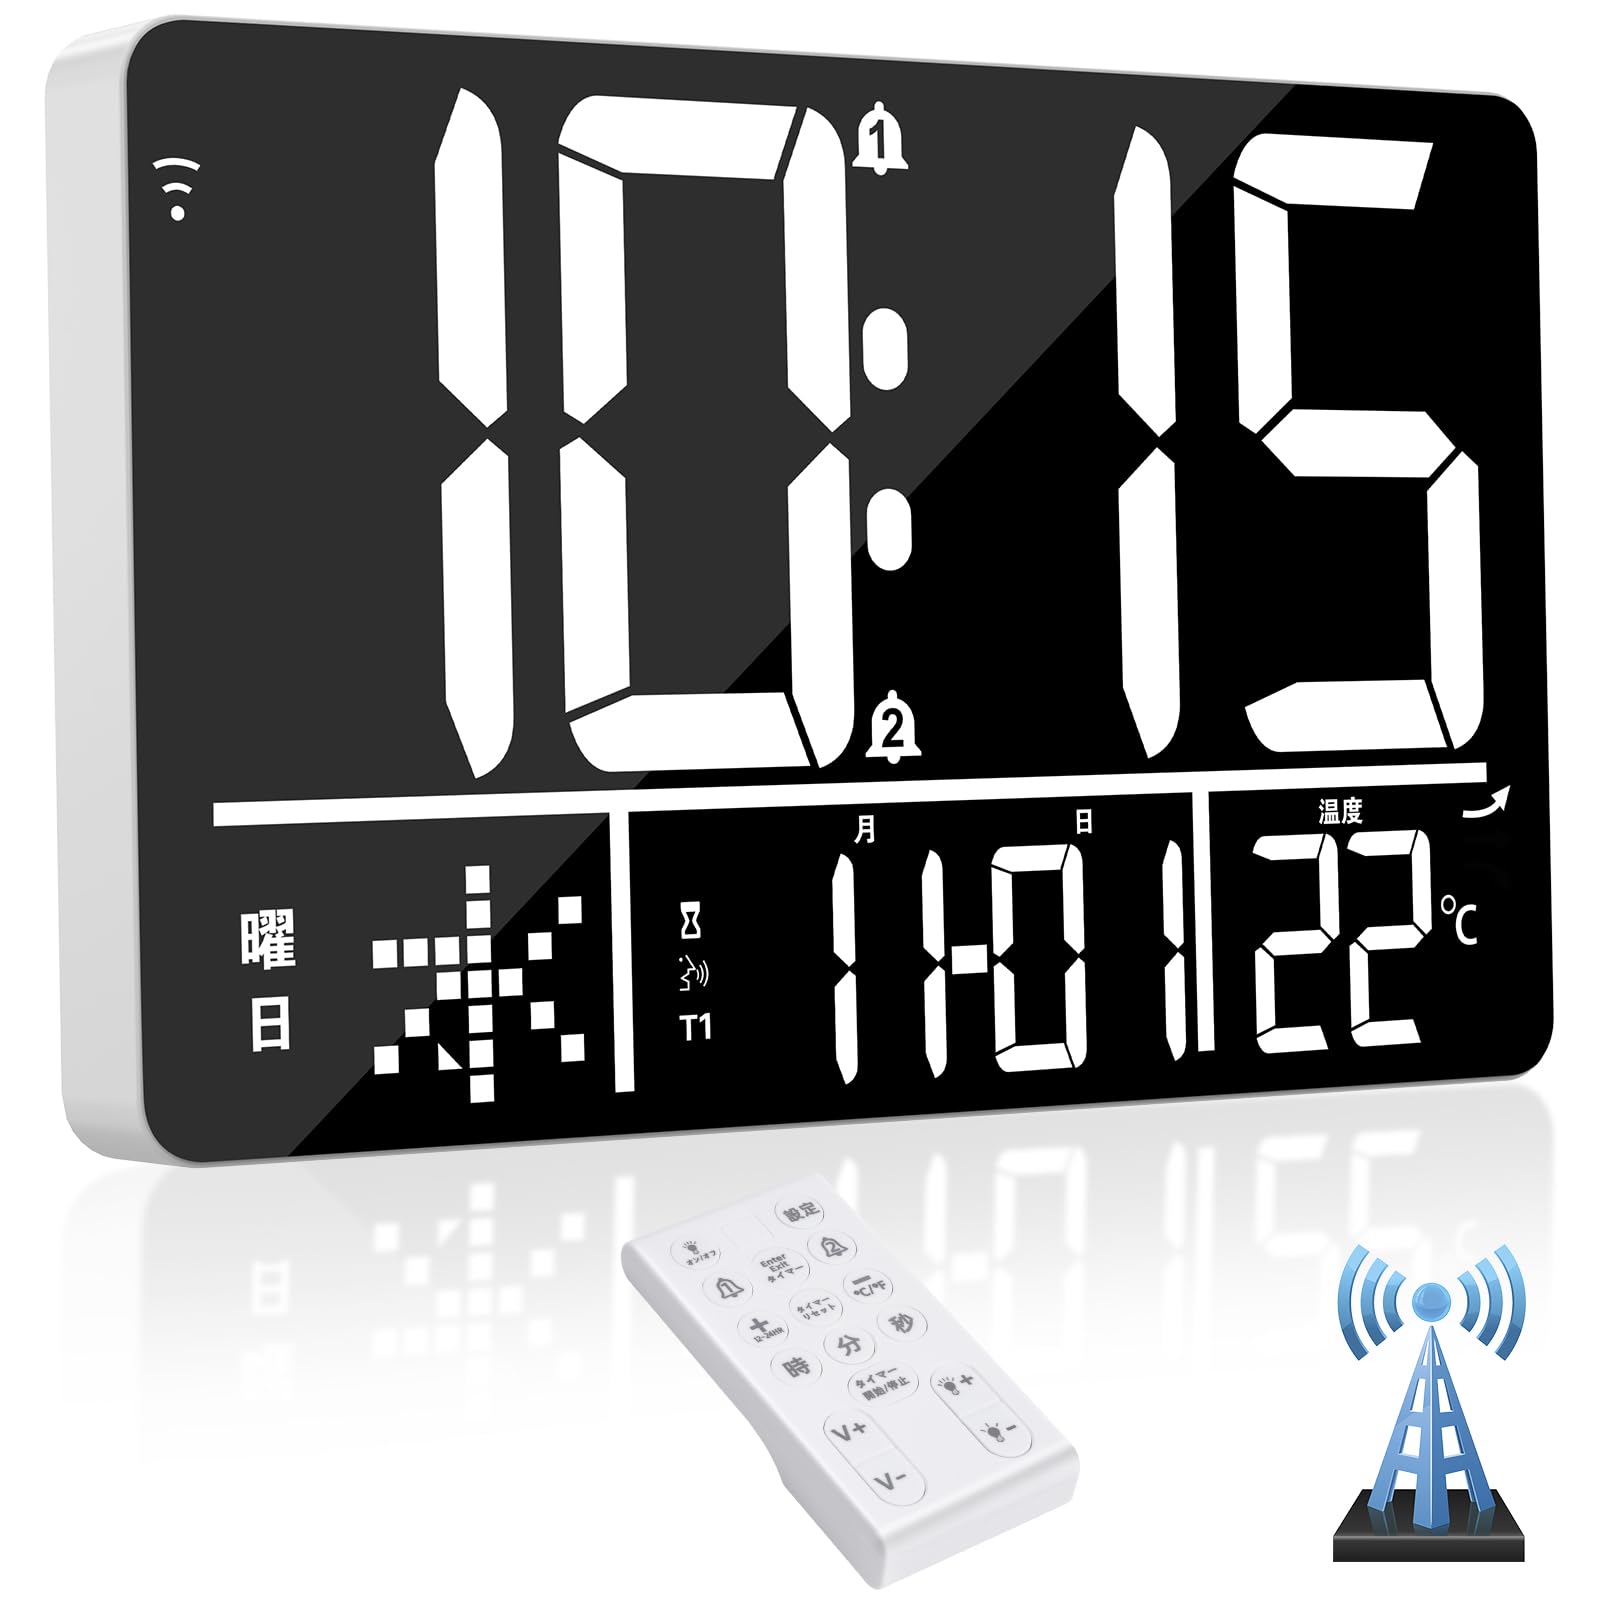 Blueekin デジタル時計 WiFi 自動時刻修正 電波 大型 13インチ 4段階調光 2組アラーム 25種音楽ベル 4段階音量調節 デジタルカレンダー スヌーズ タイマー 音声アナウンス 置き掛け兼用 12H/24H時間表示 温度付き